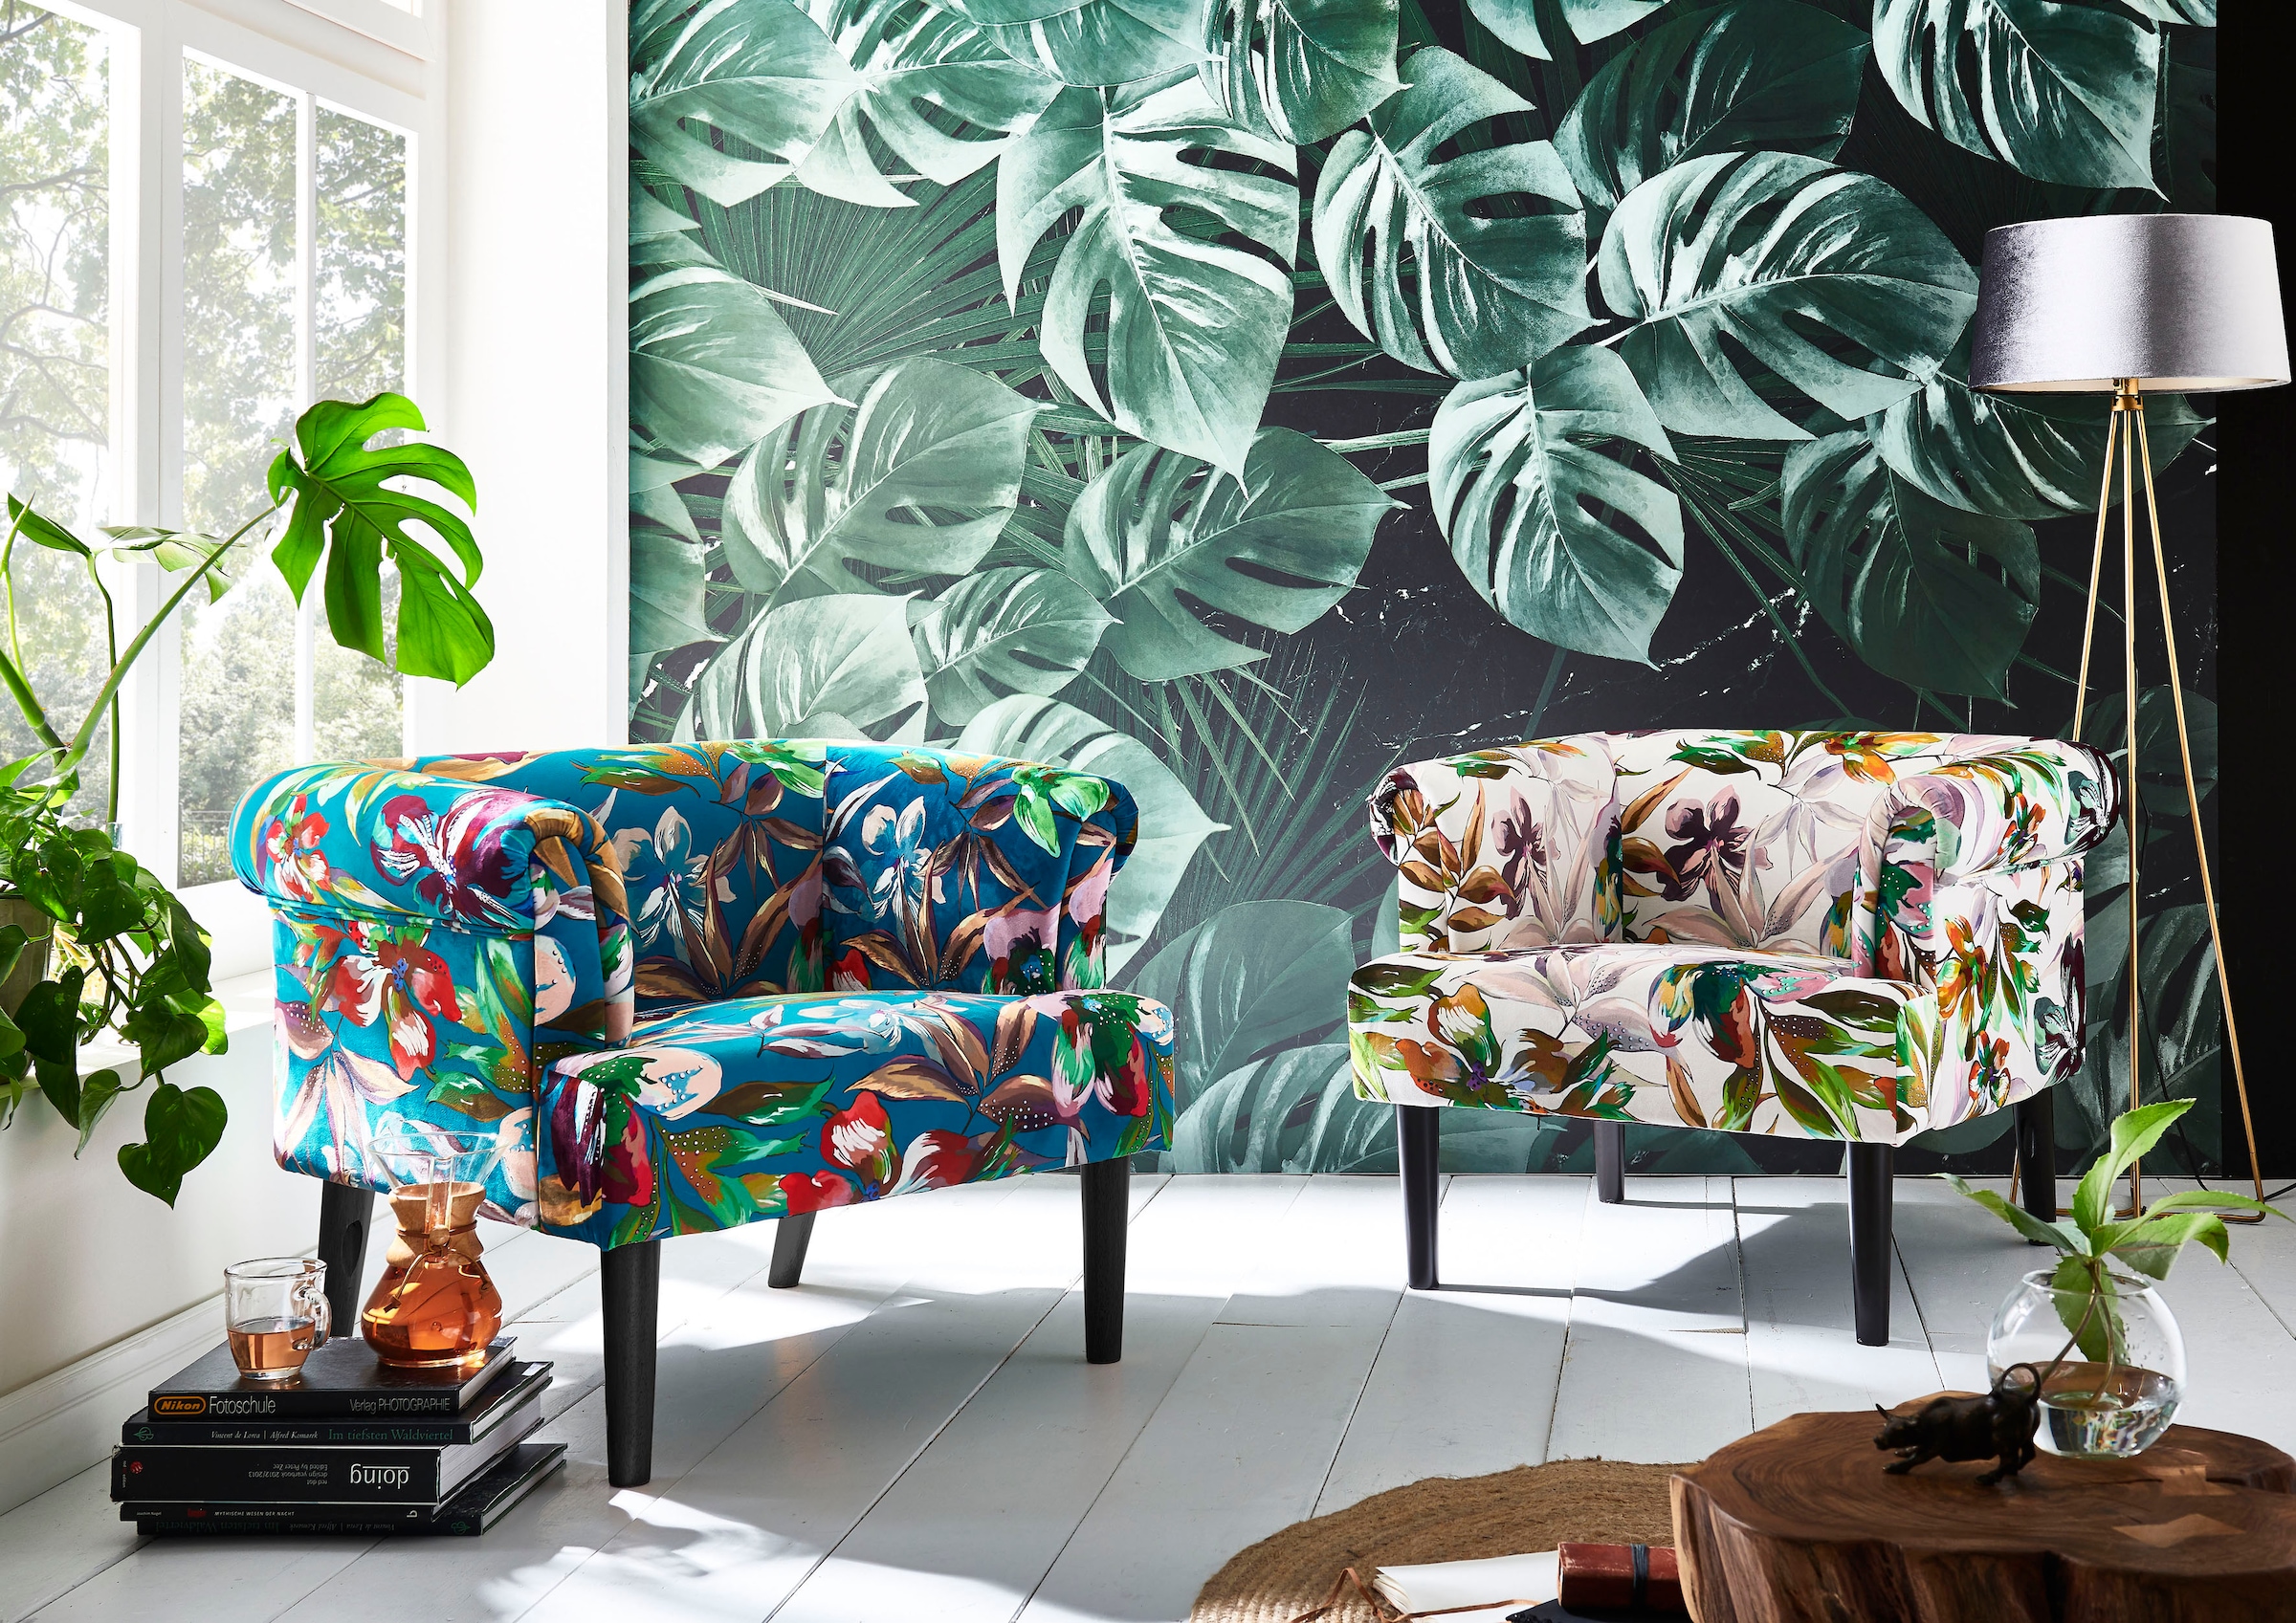 BAUR | Loungesessel ATLANTIC kaufen collection mit Sessel, home Wellenunterfederung